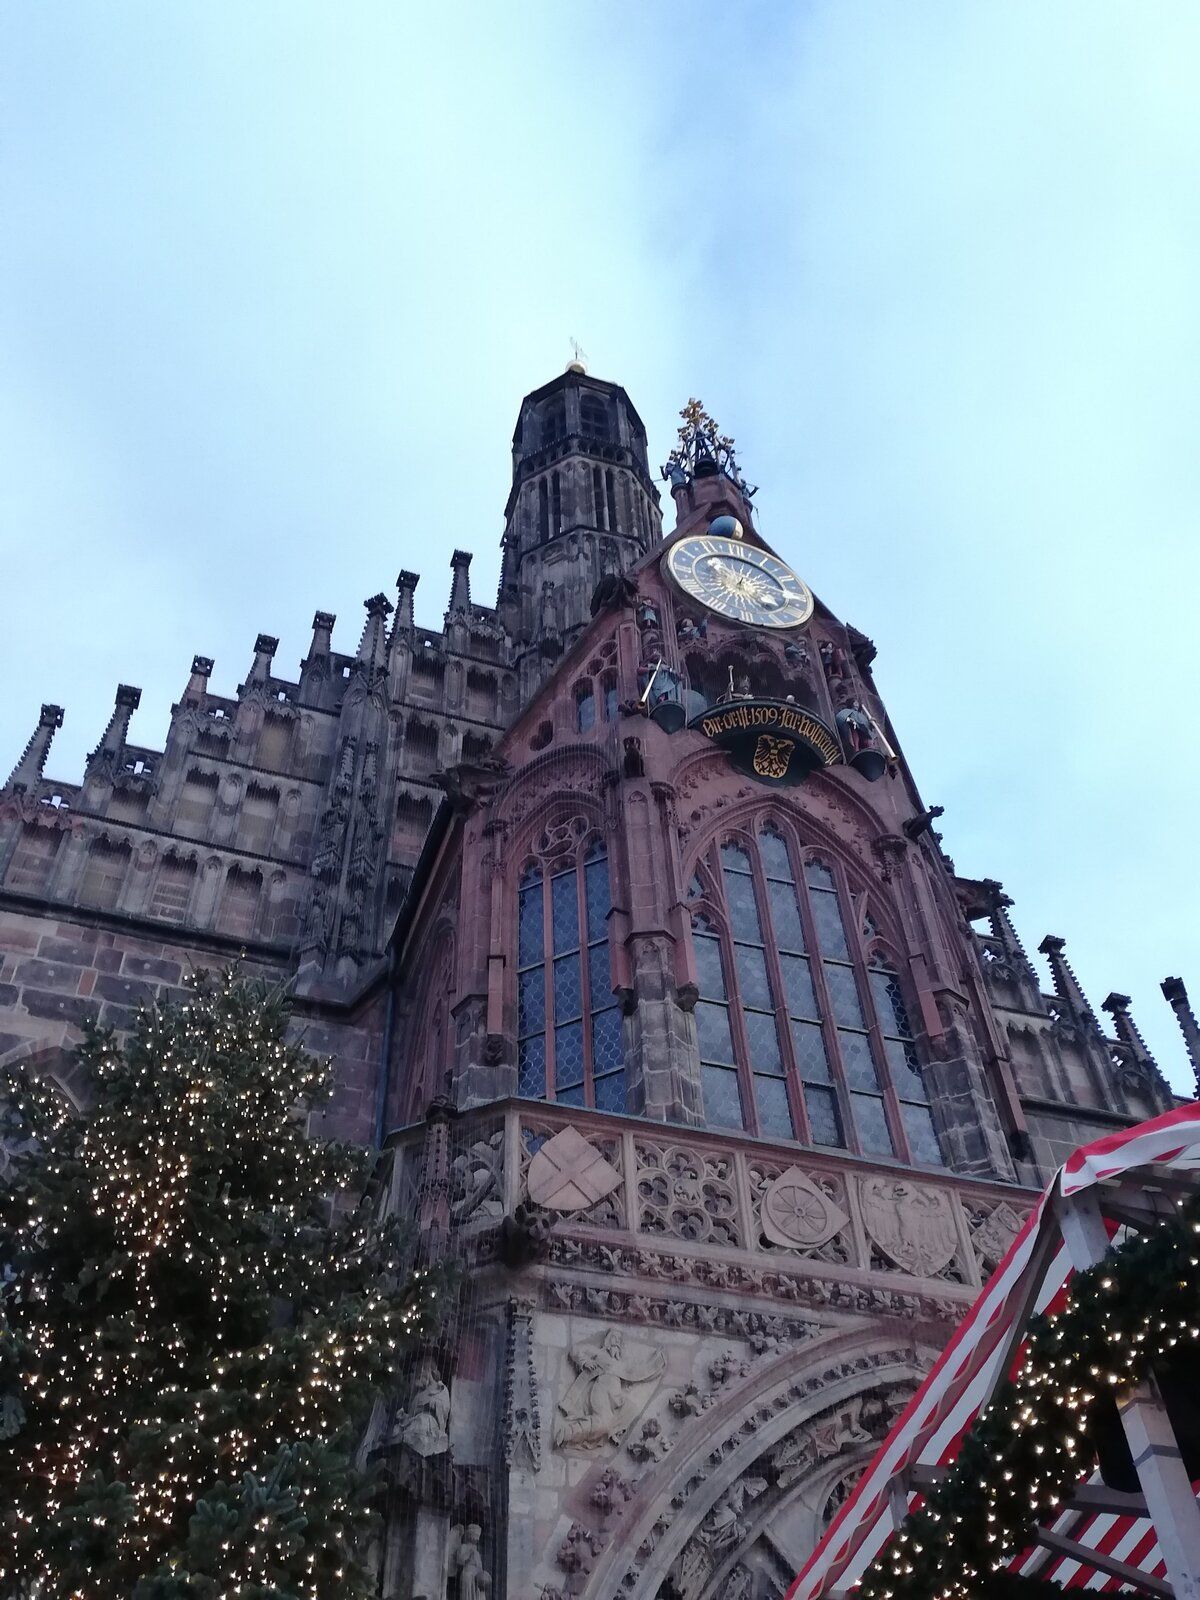 Frauenkirche - Nuremberga